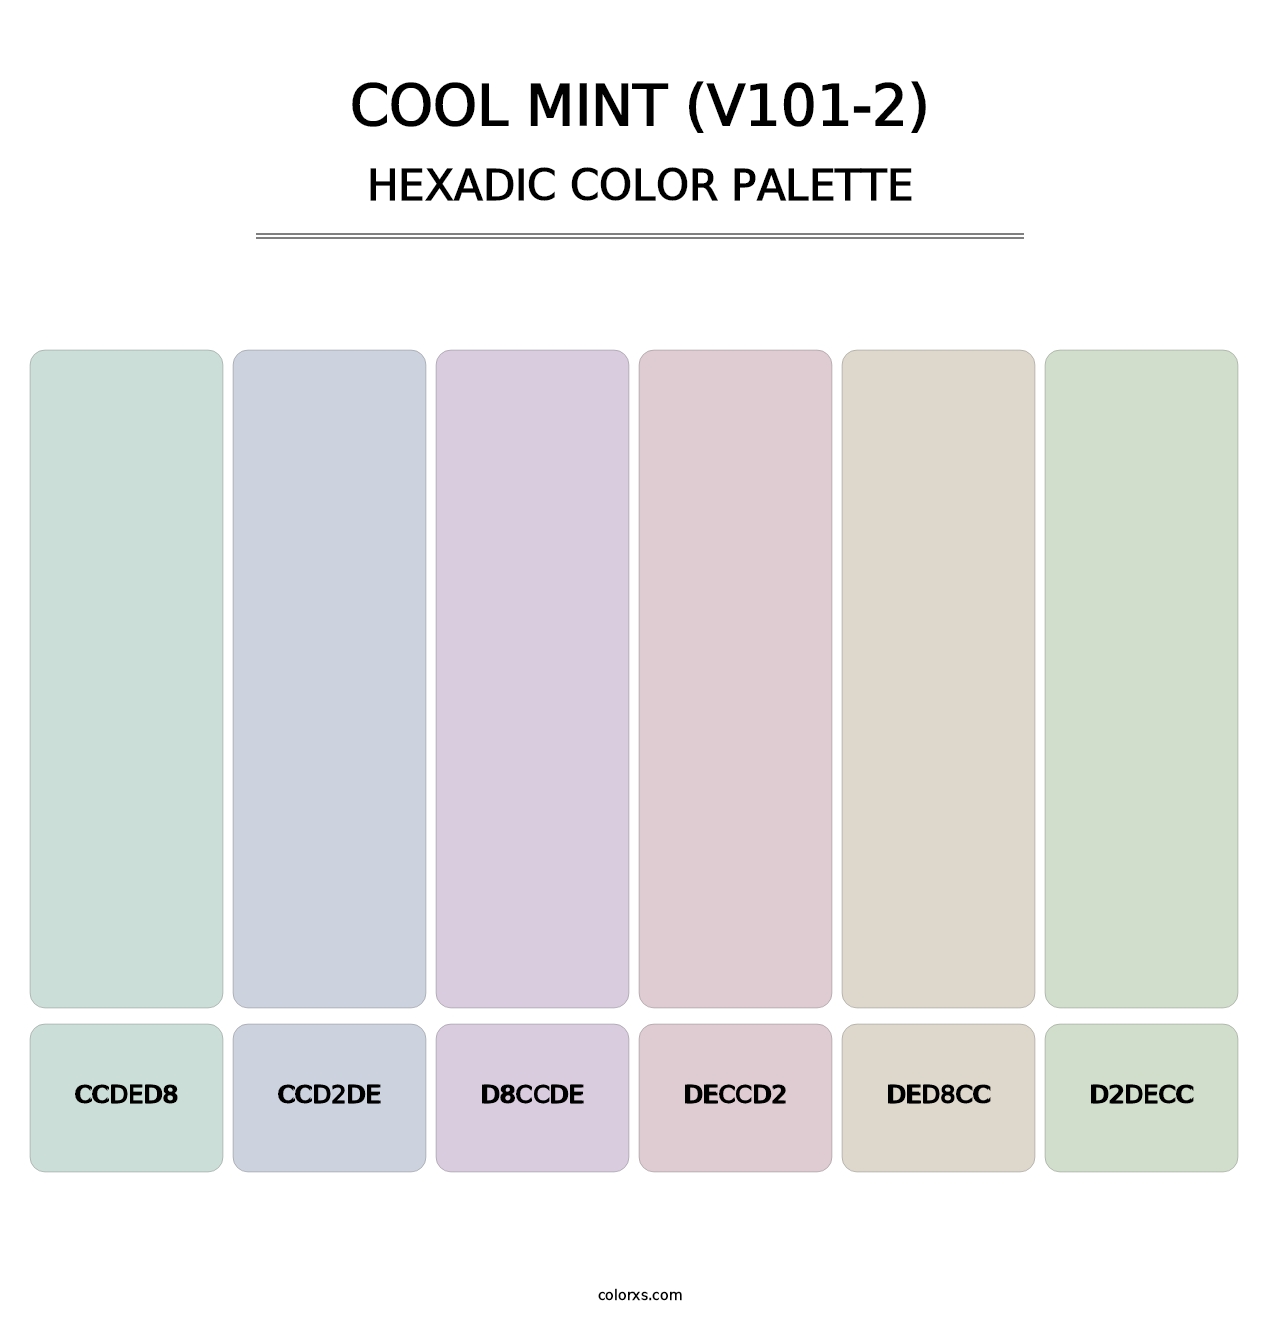 Cool Mint (V101-2) - Hexadic Color Palette